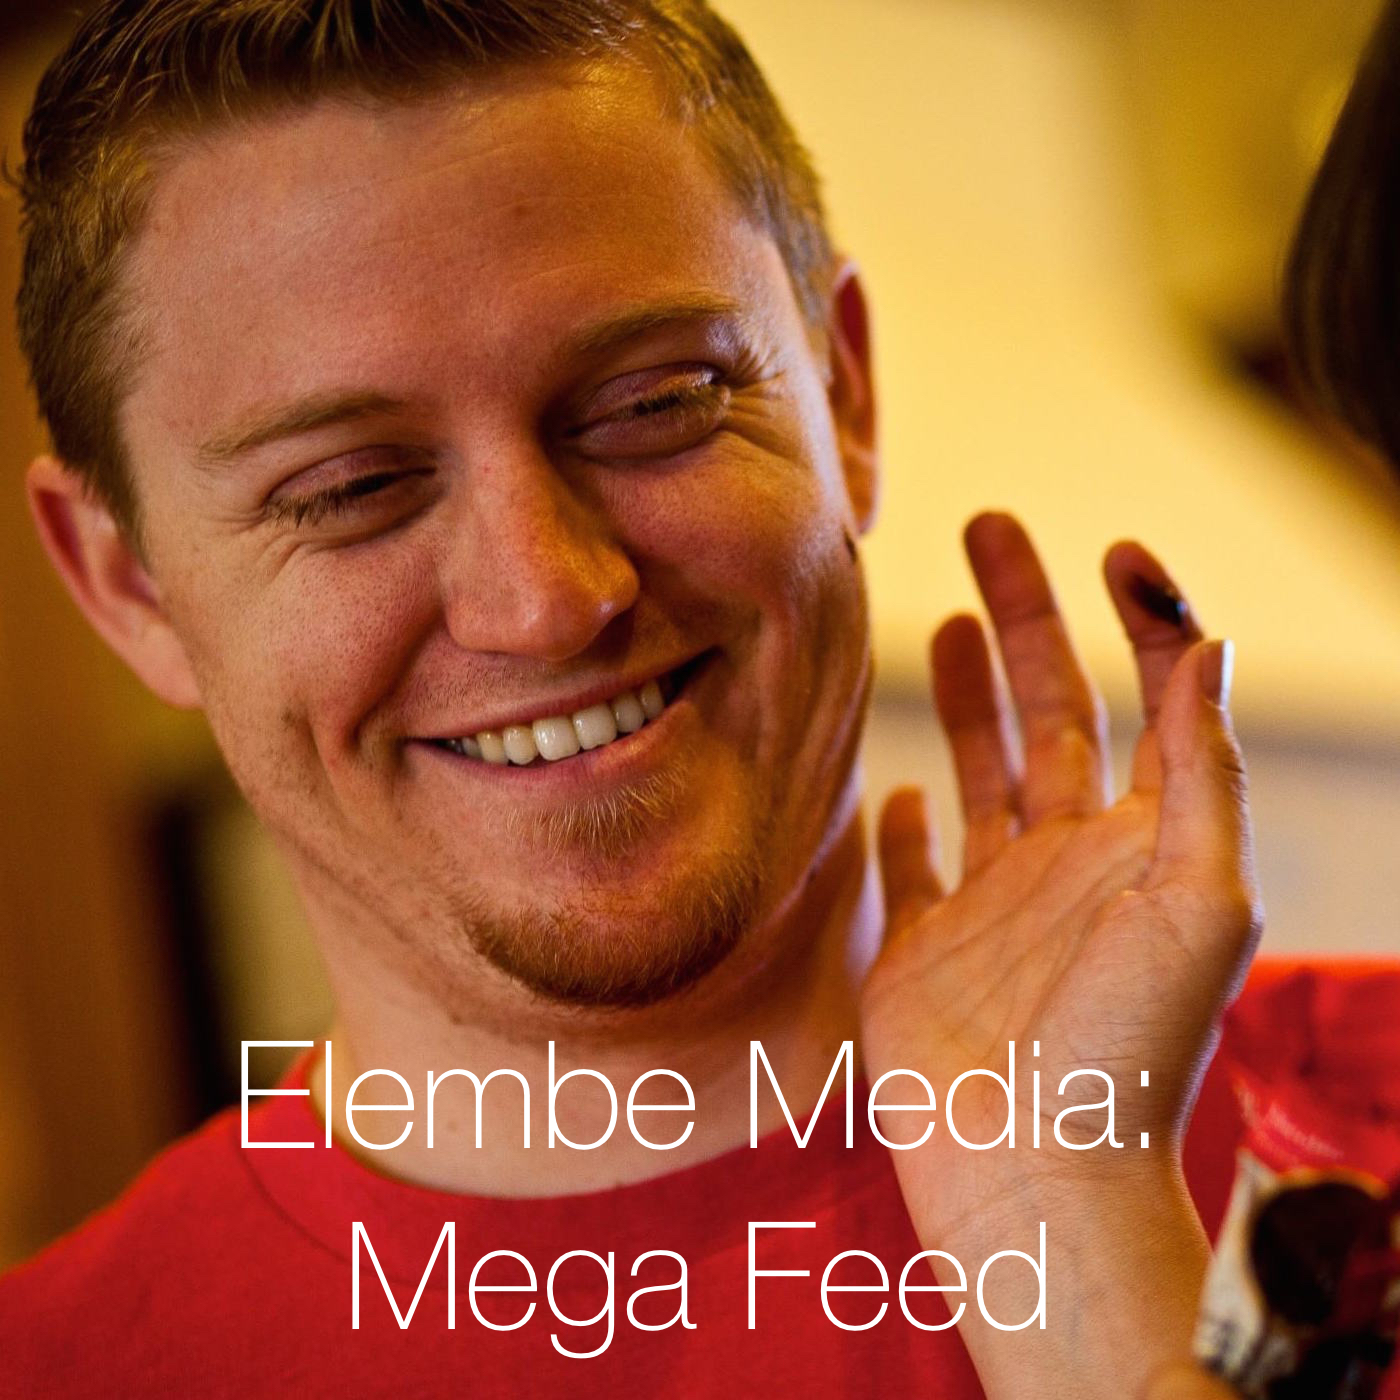 ElembeMedia: Super Mega Feed